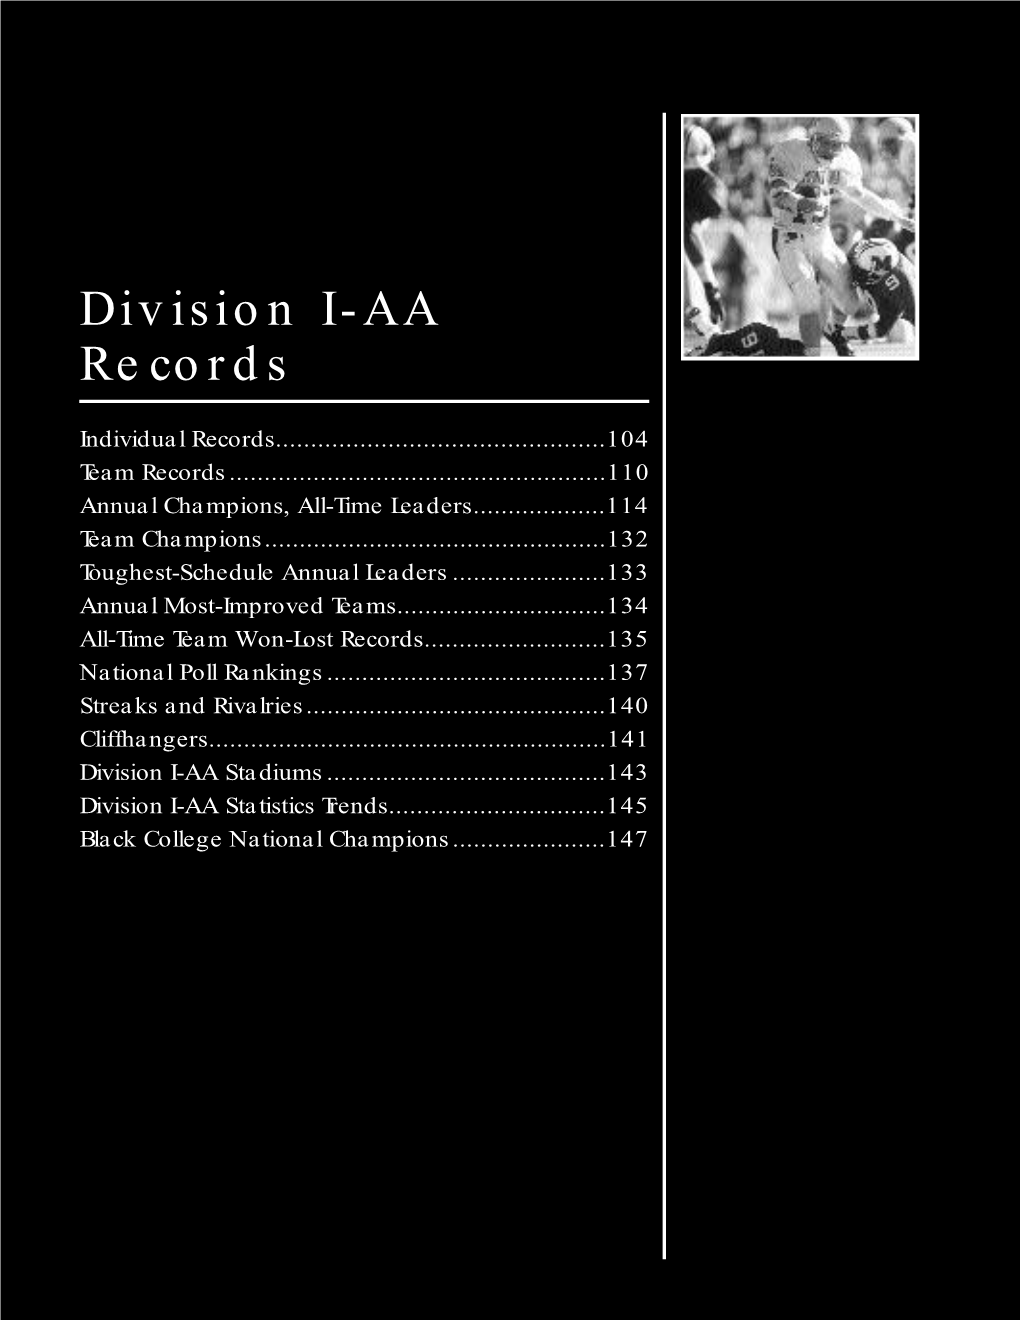 Division IA Football Records